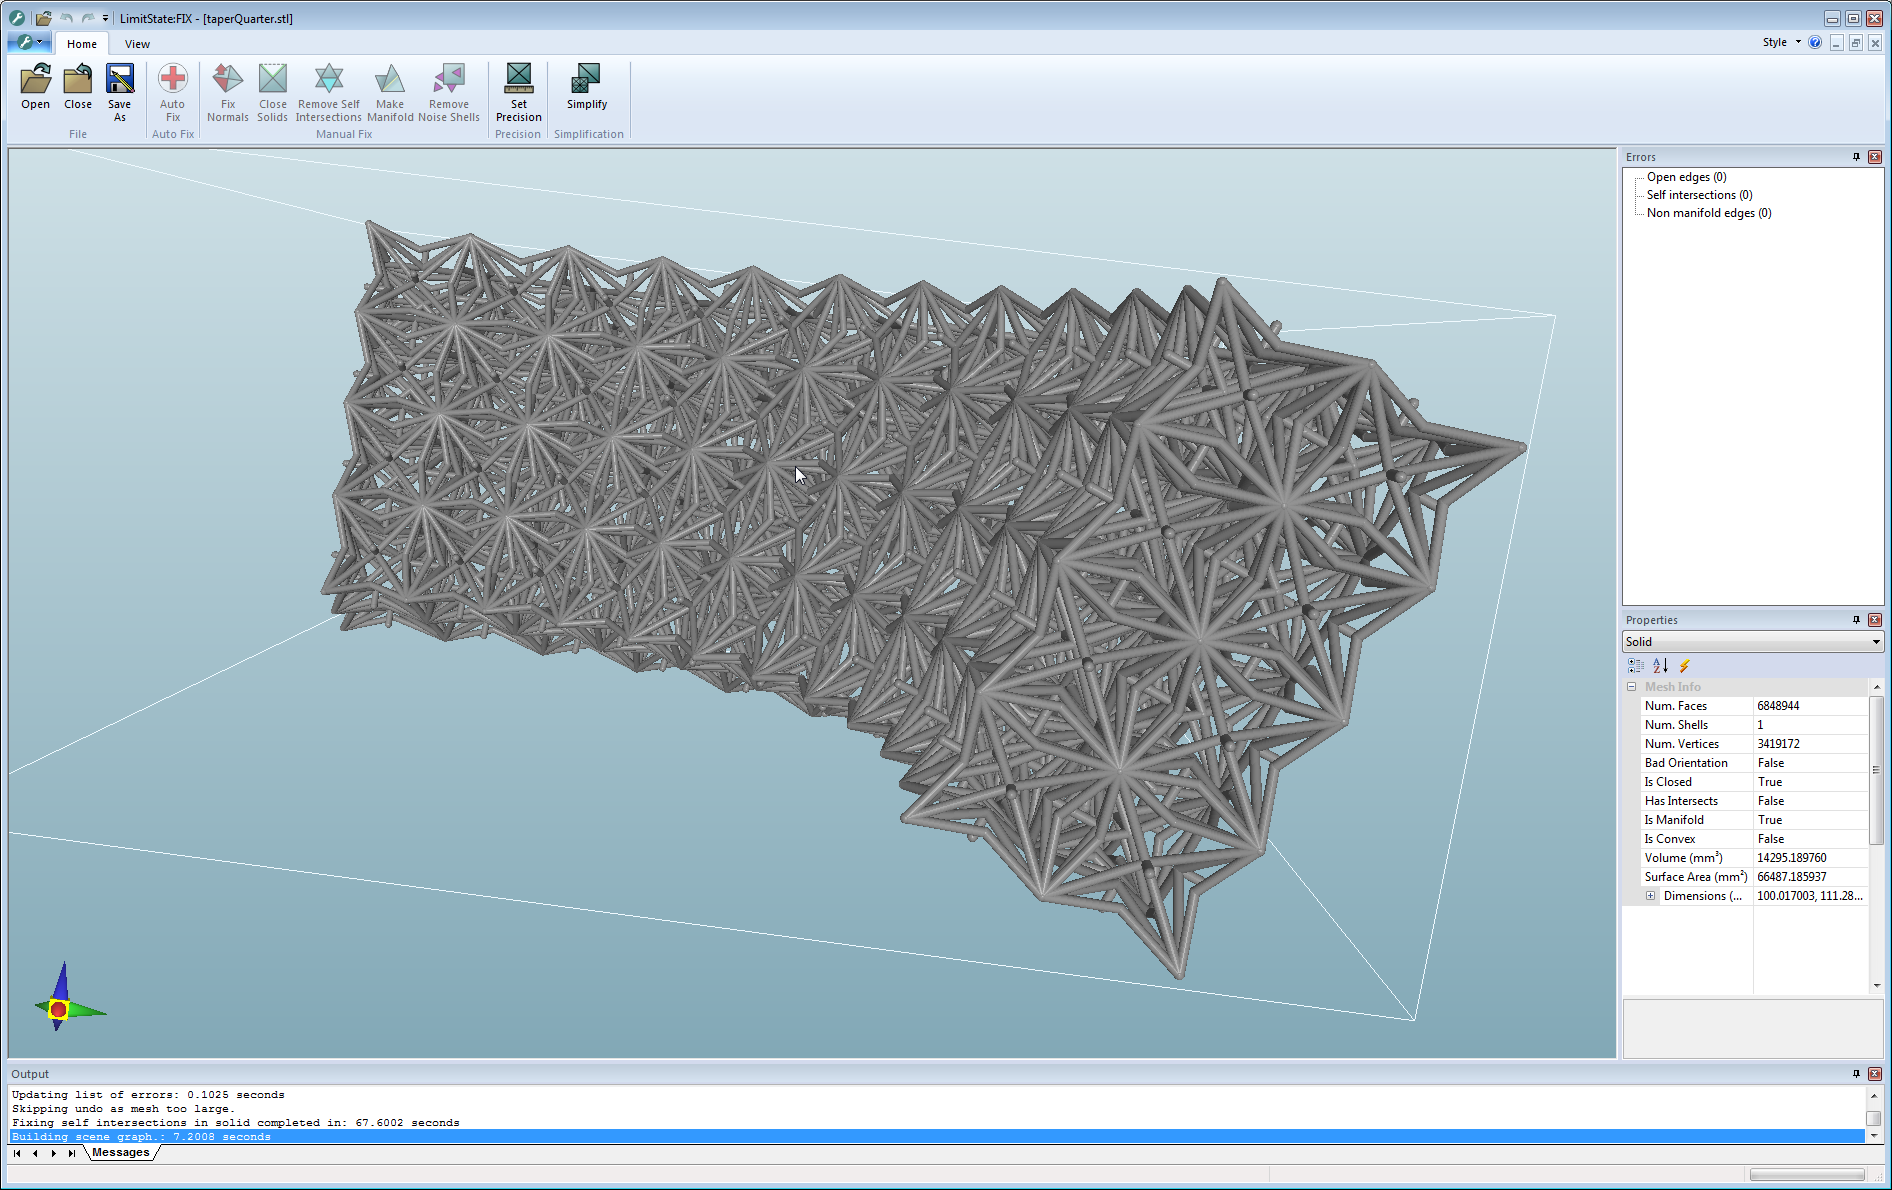 3D STL model of complex aerospace lattice using auextic materials